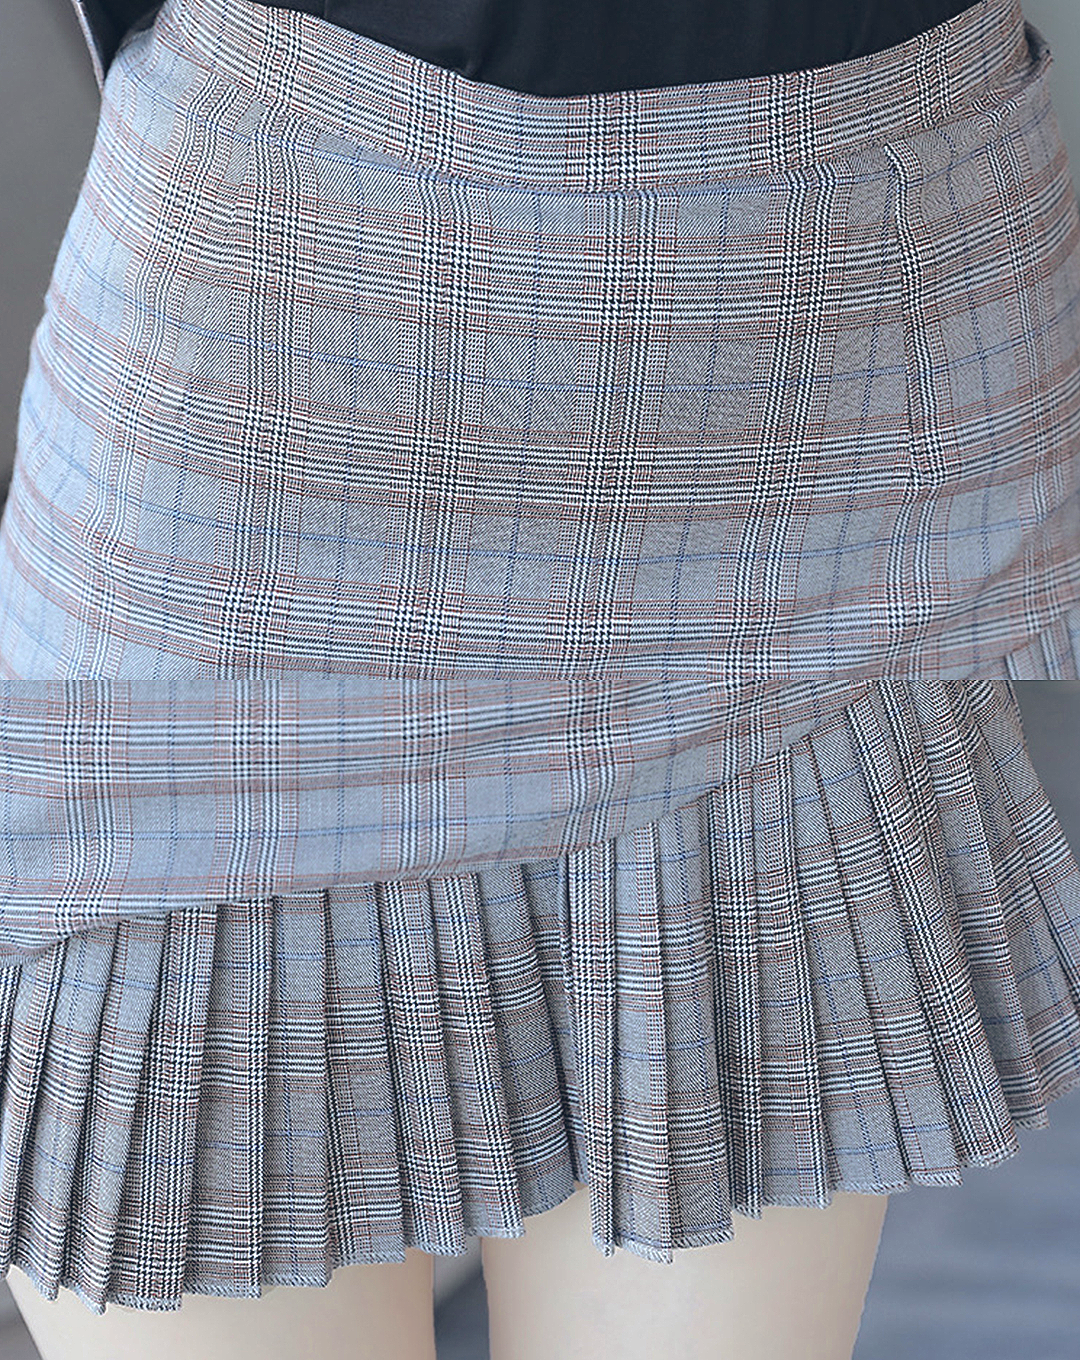 ♀Glen Plaid Skirt Suit